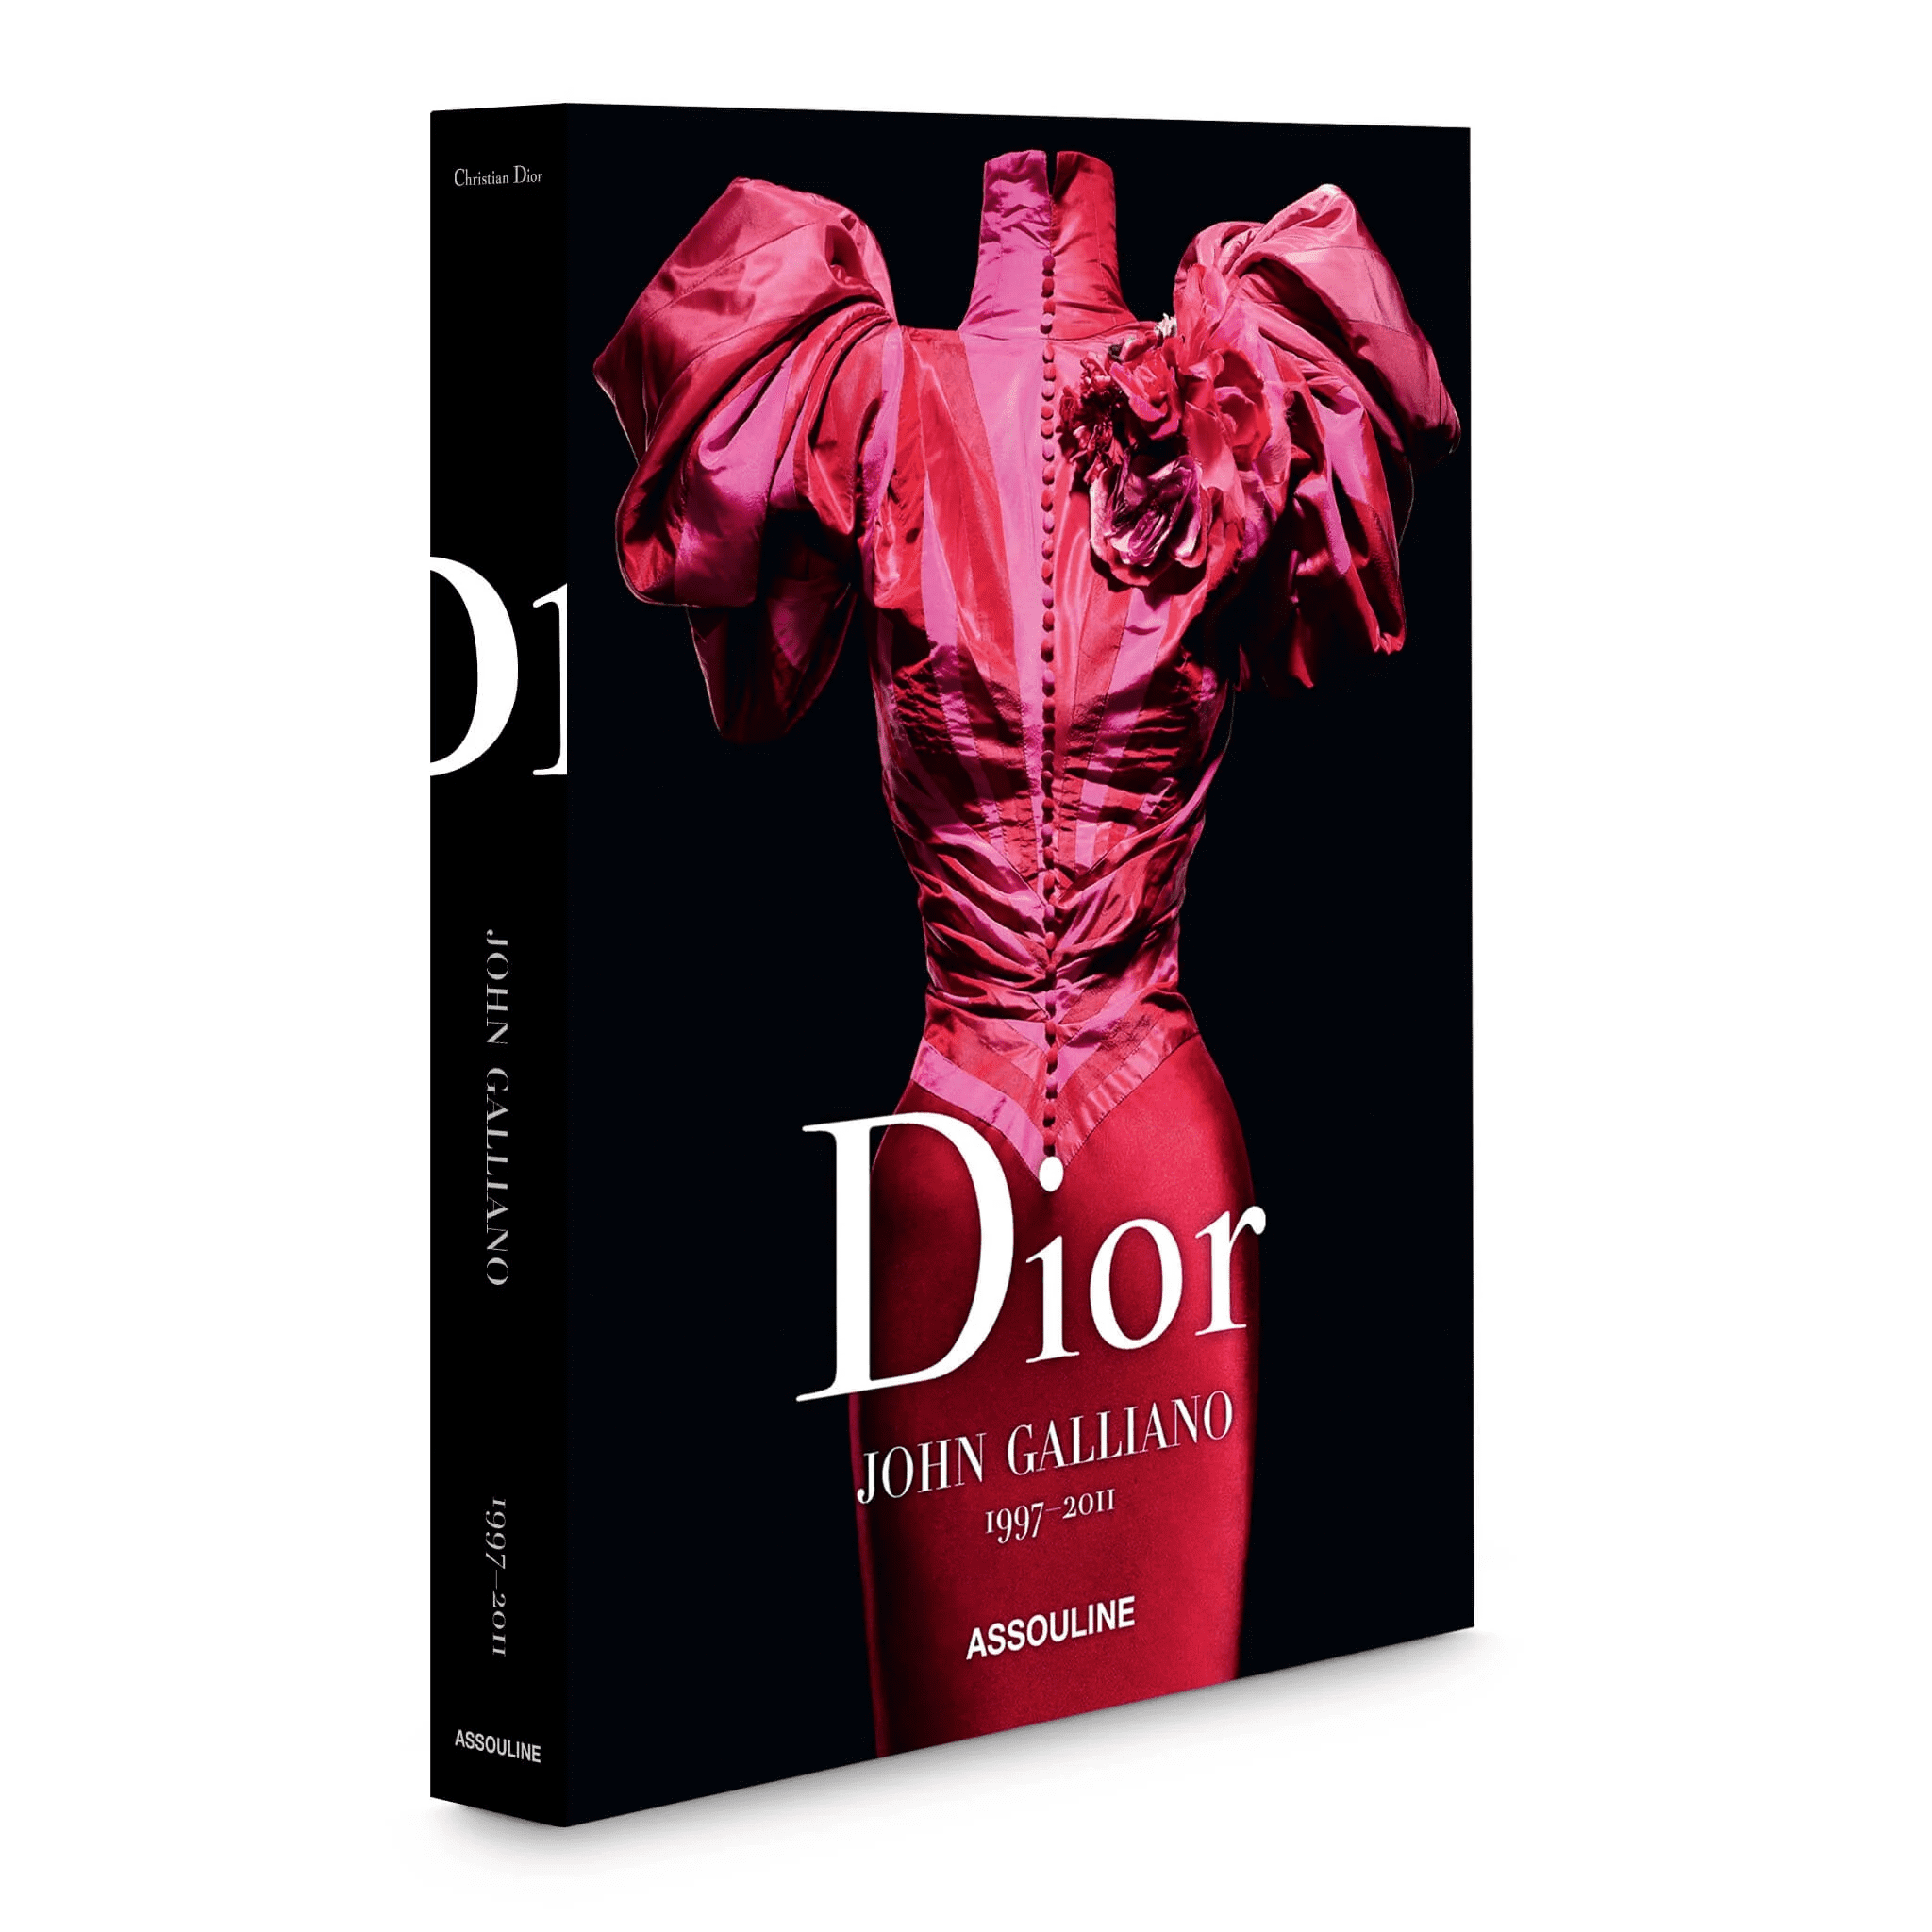 Dior by John Galliano | Assouline | Iris Gifts & Décor